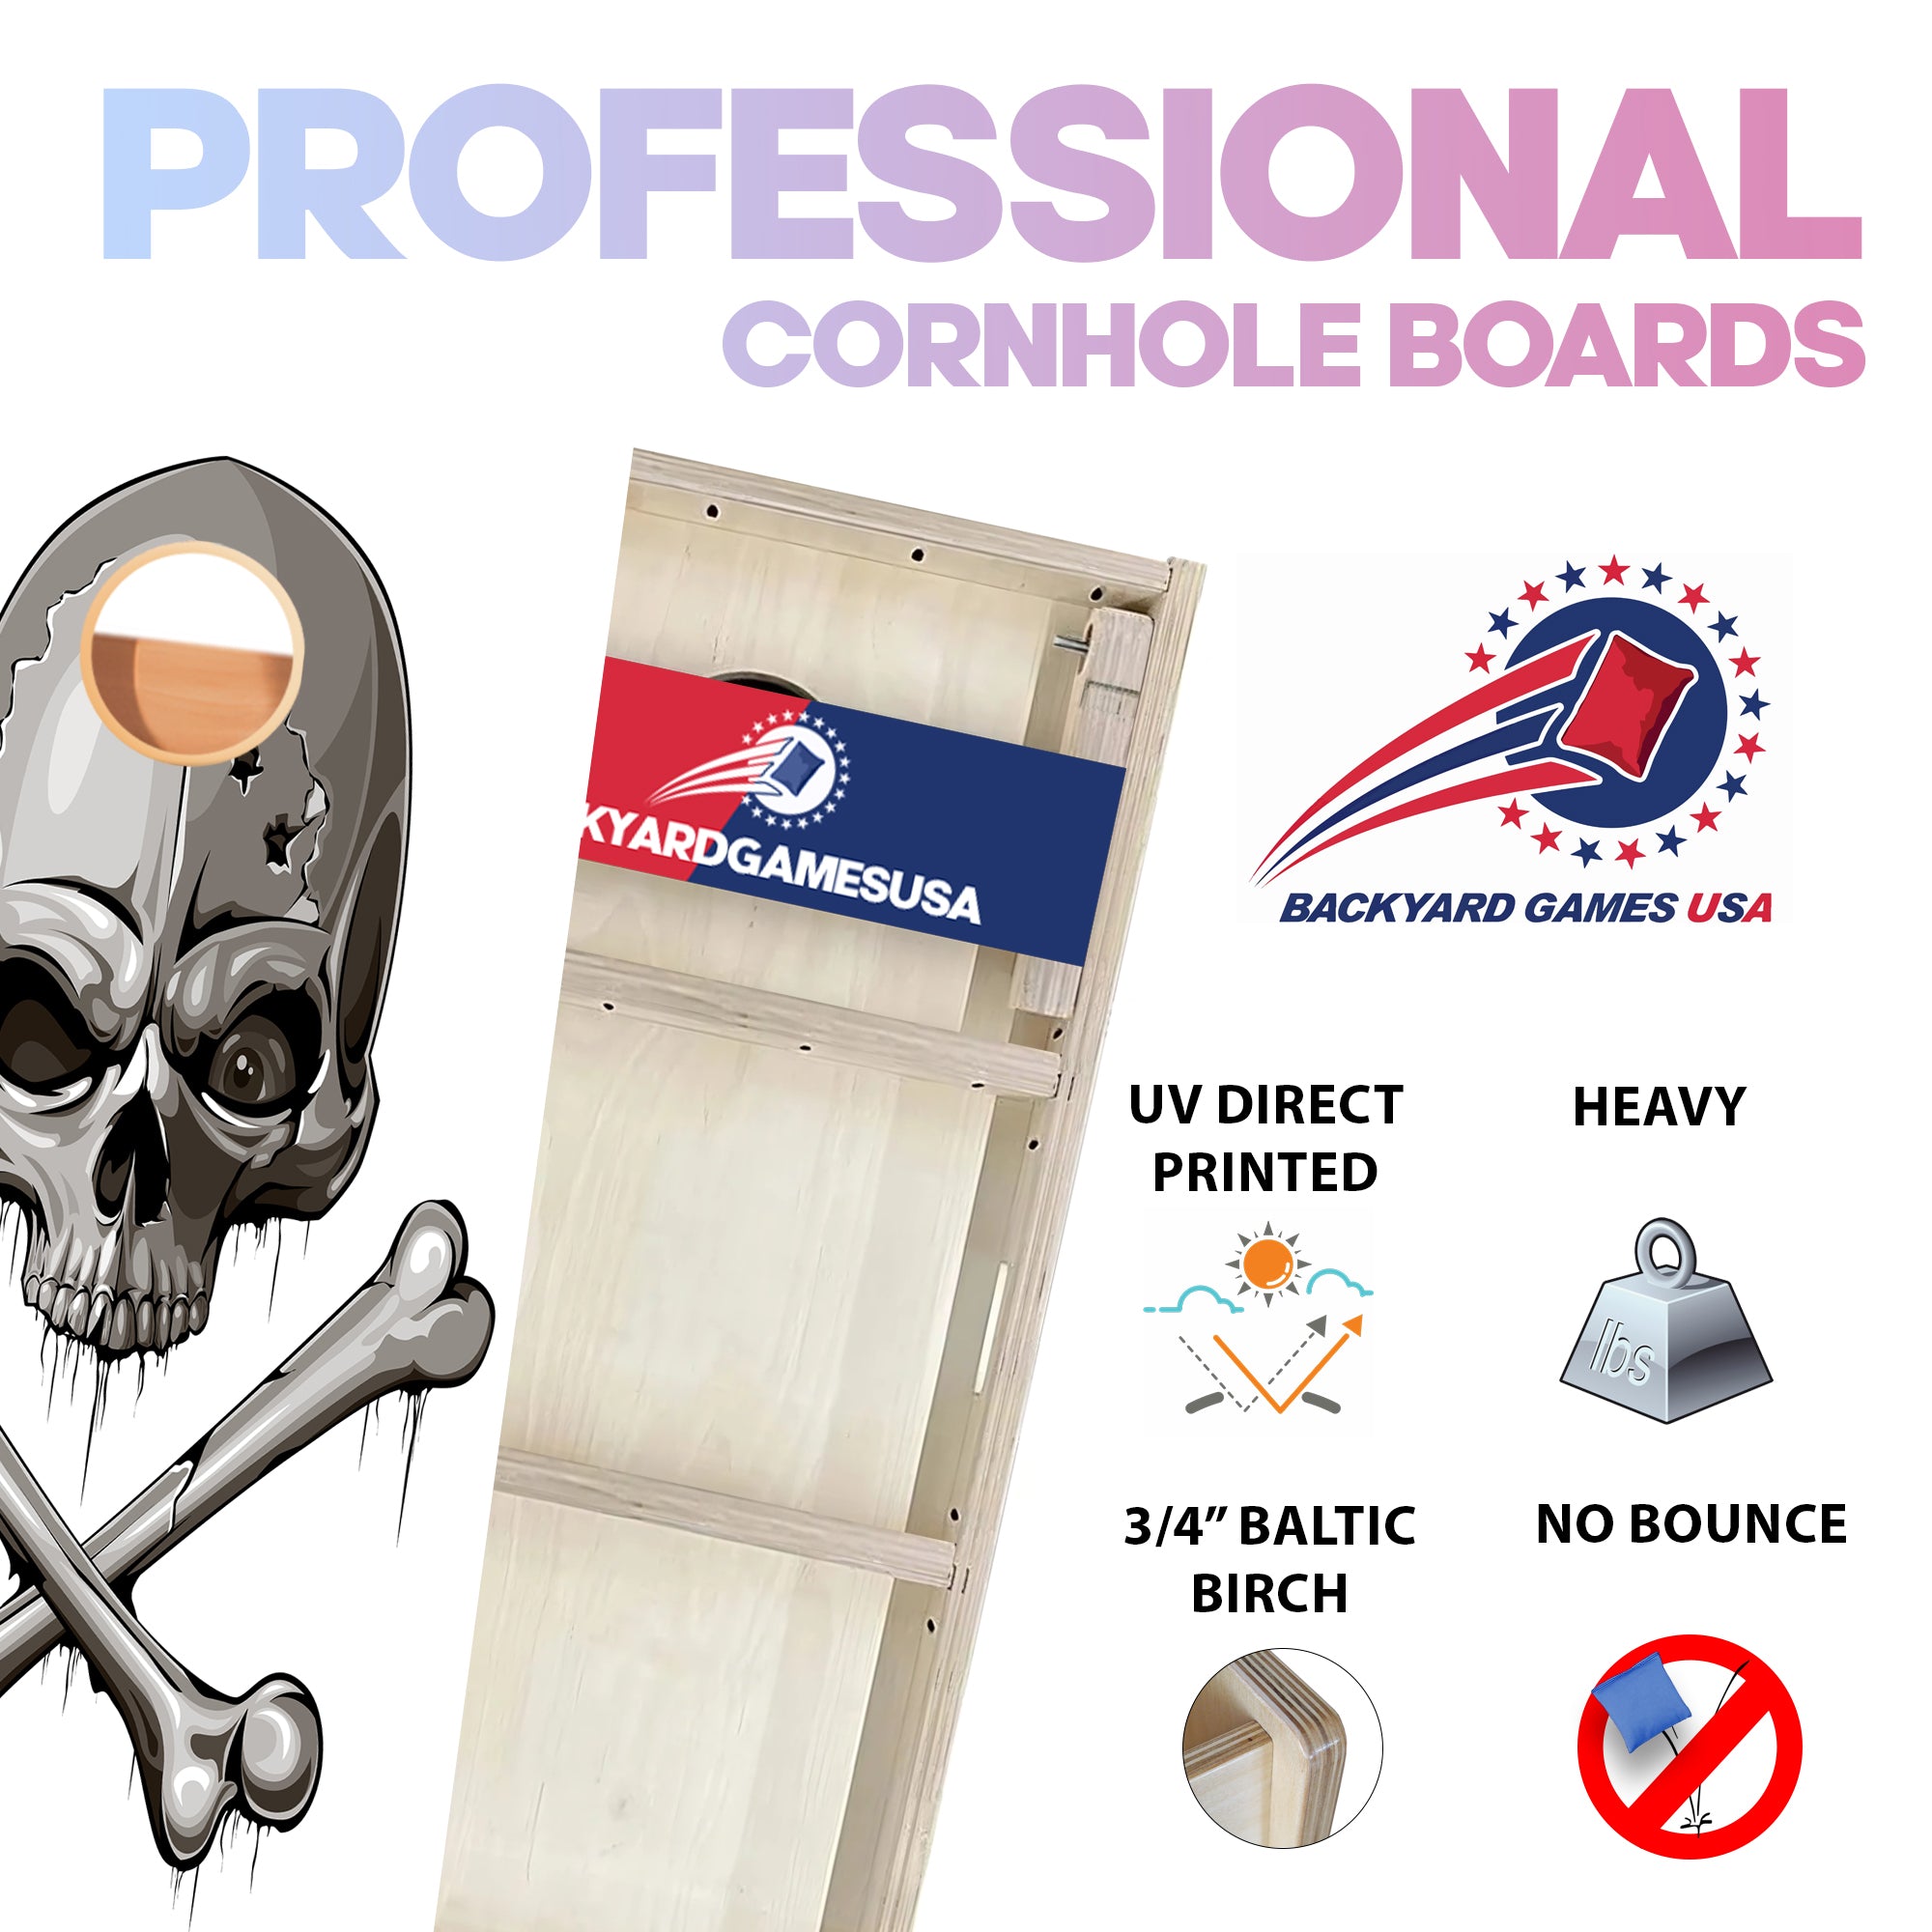 White Skull Bones Professional Cornhole Boards